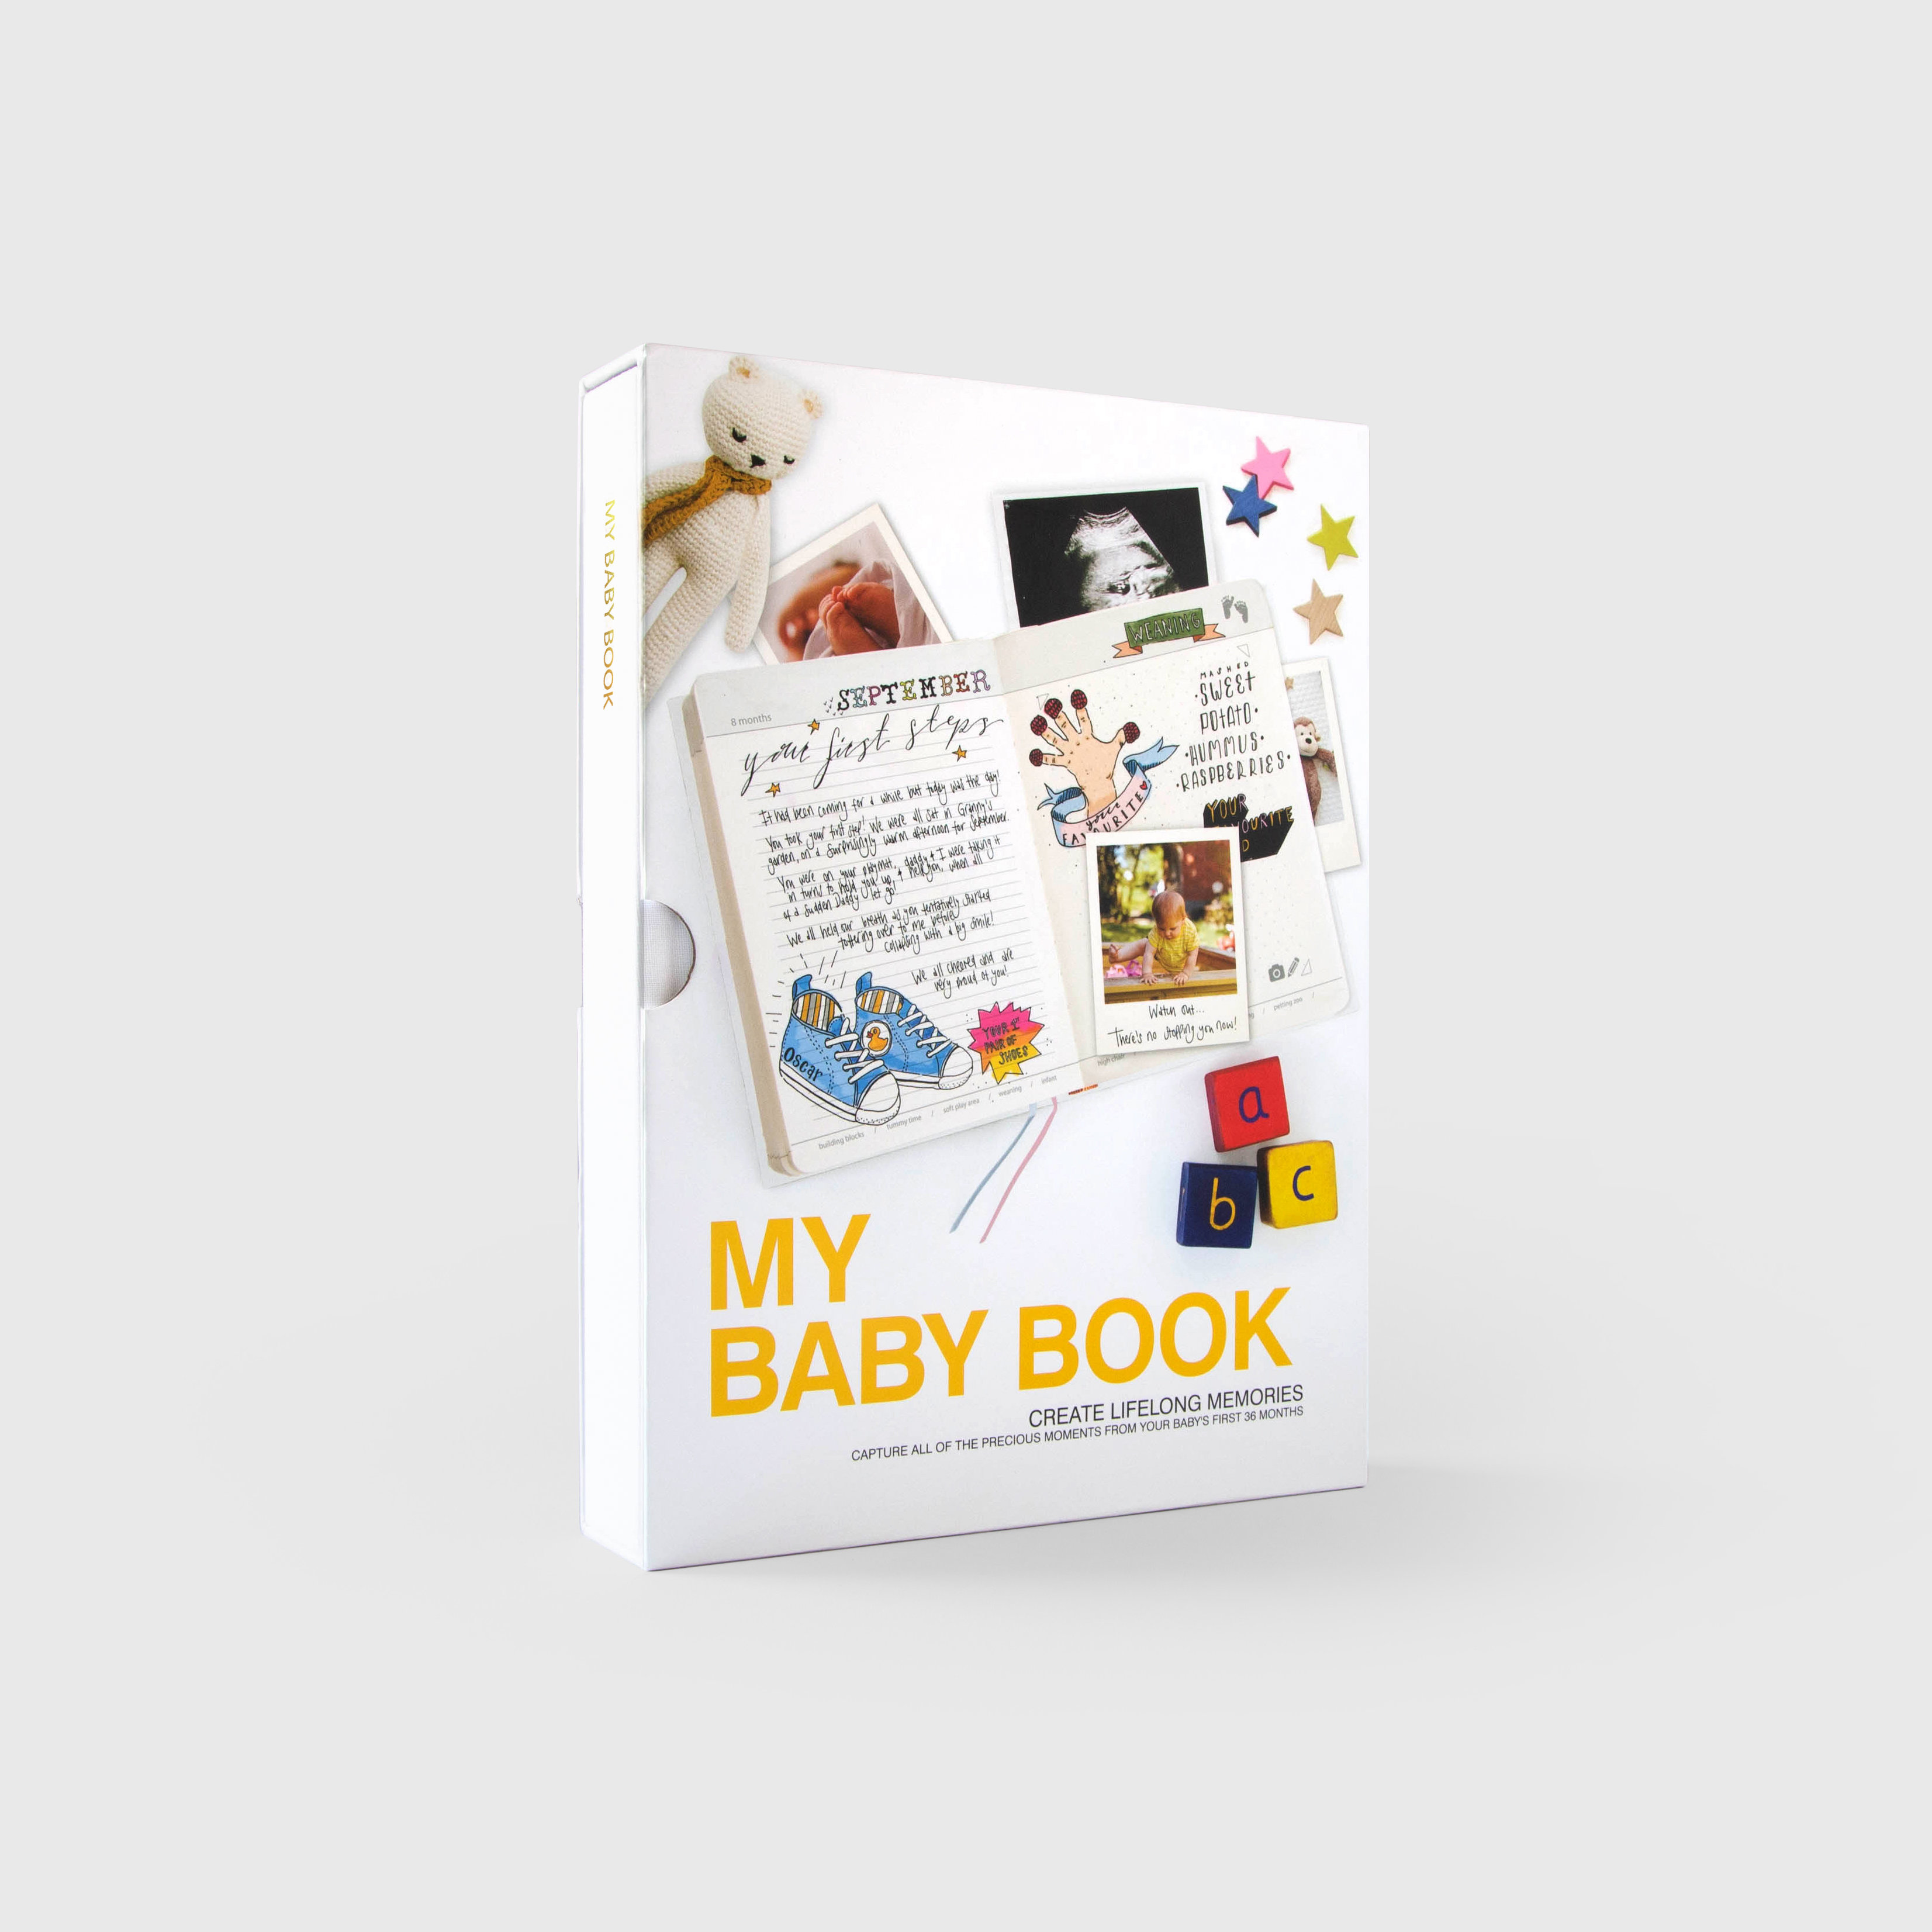 My Baby Book in packaging